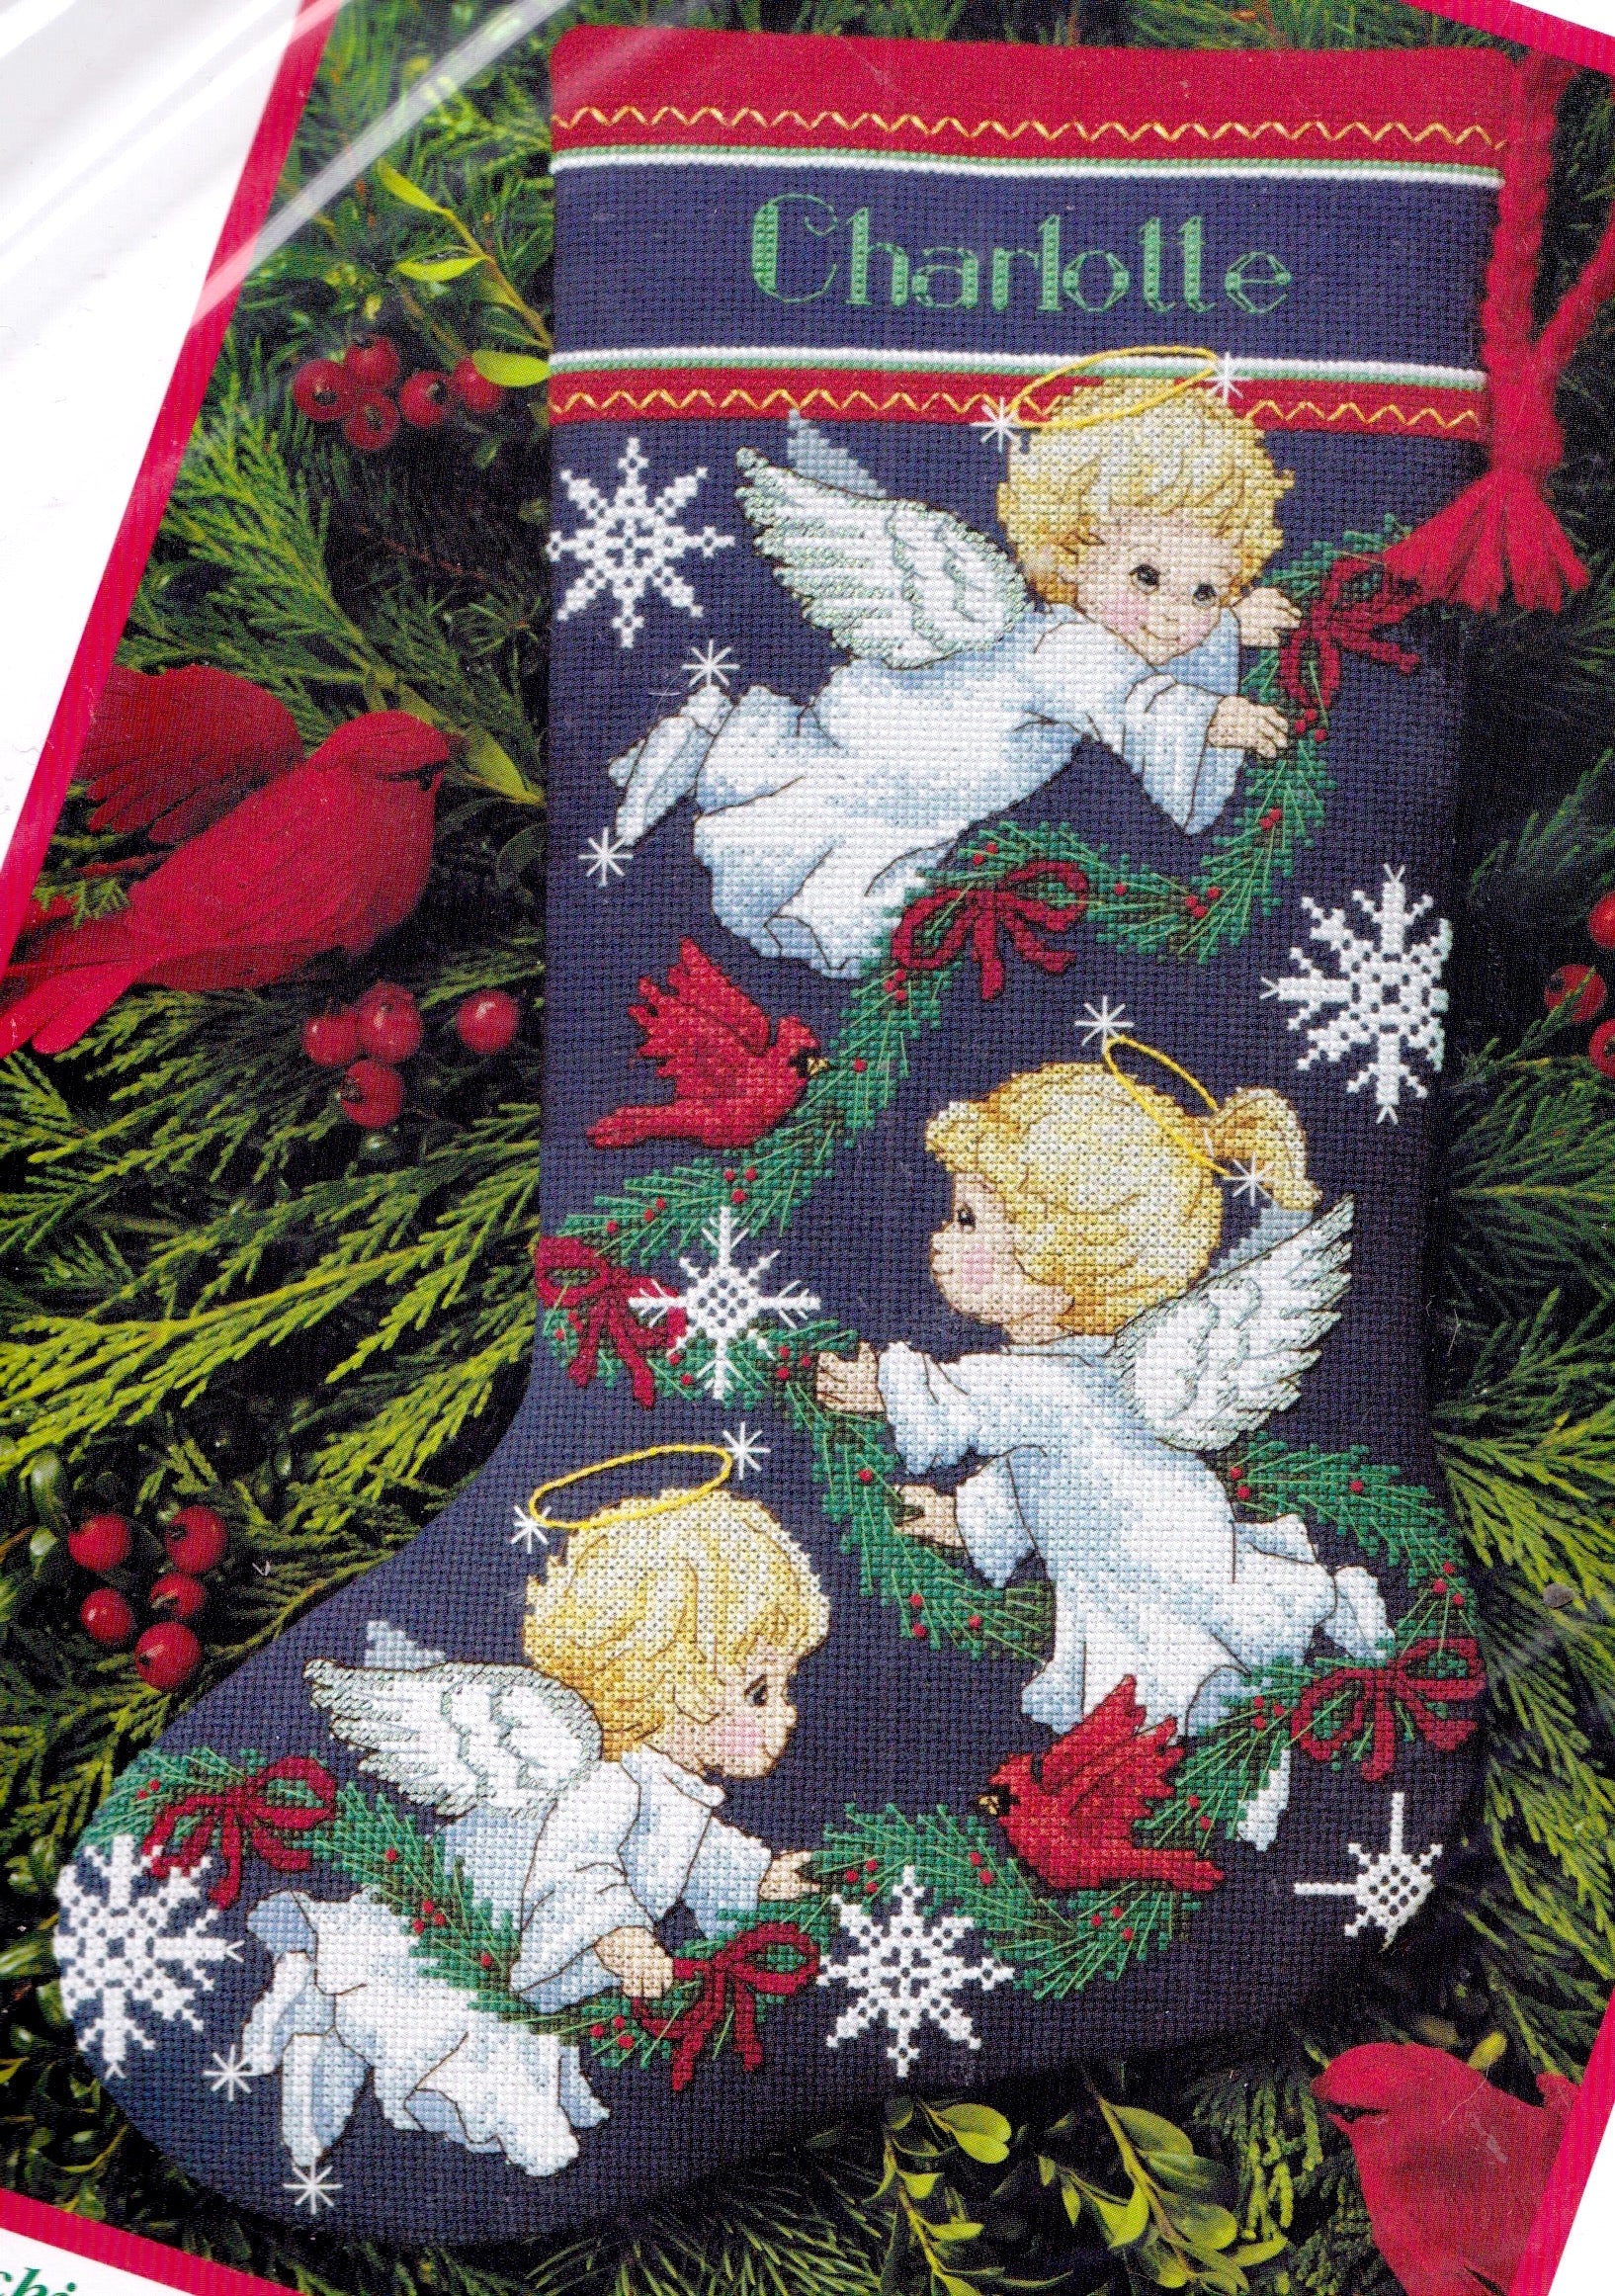 Sunset 12 Days of Christmas Stocking Counted Cross Stitch Kit New Sealed #18327